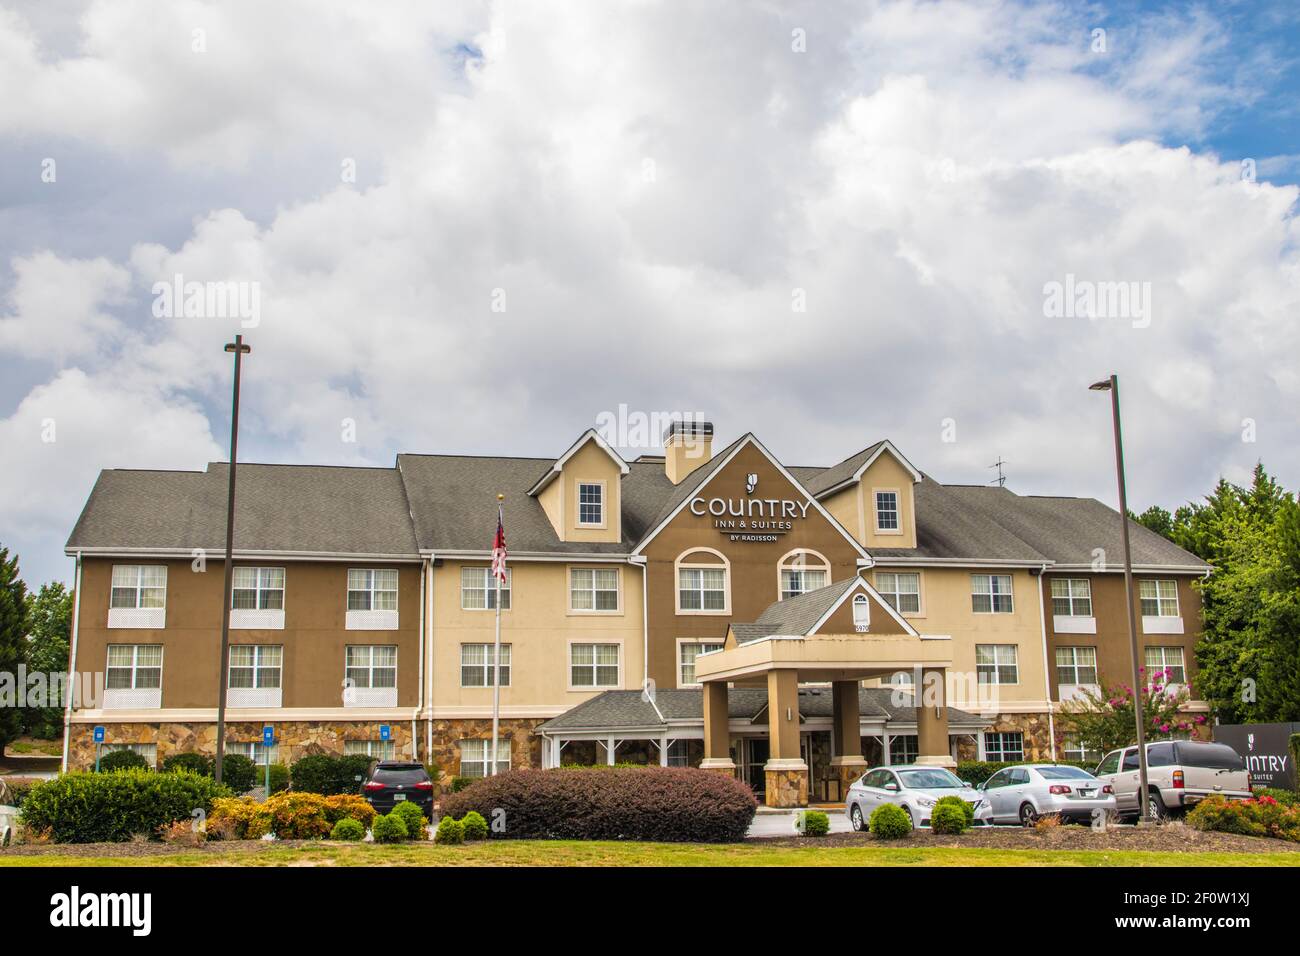 Gwinnett County, GA / Stati Uniti d'America - 07 29 20: Country Inn and Suites Hotel Foto Stock